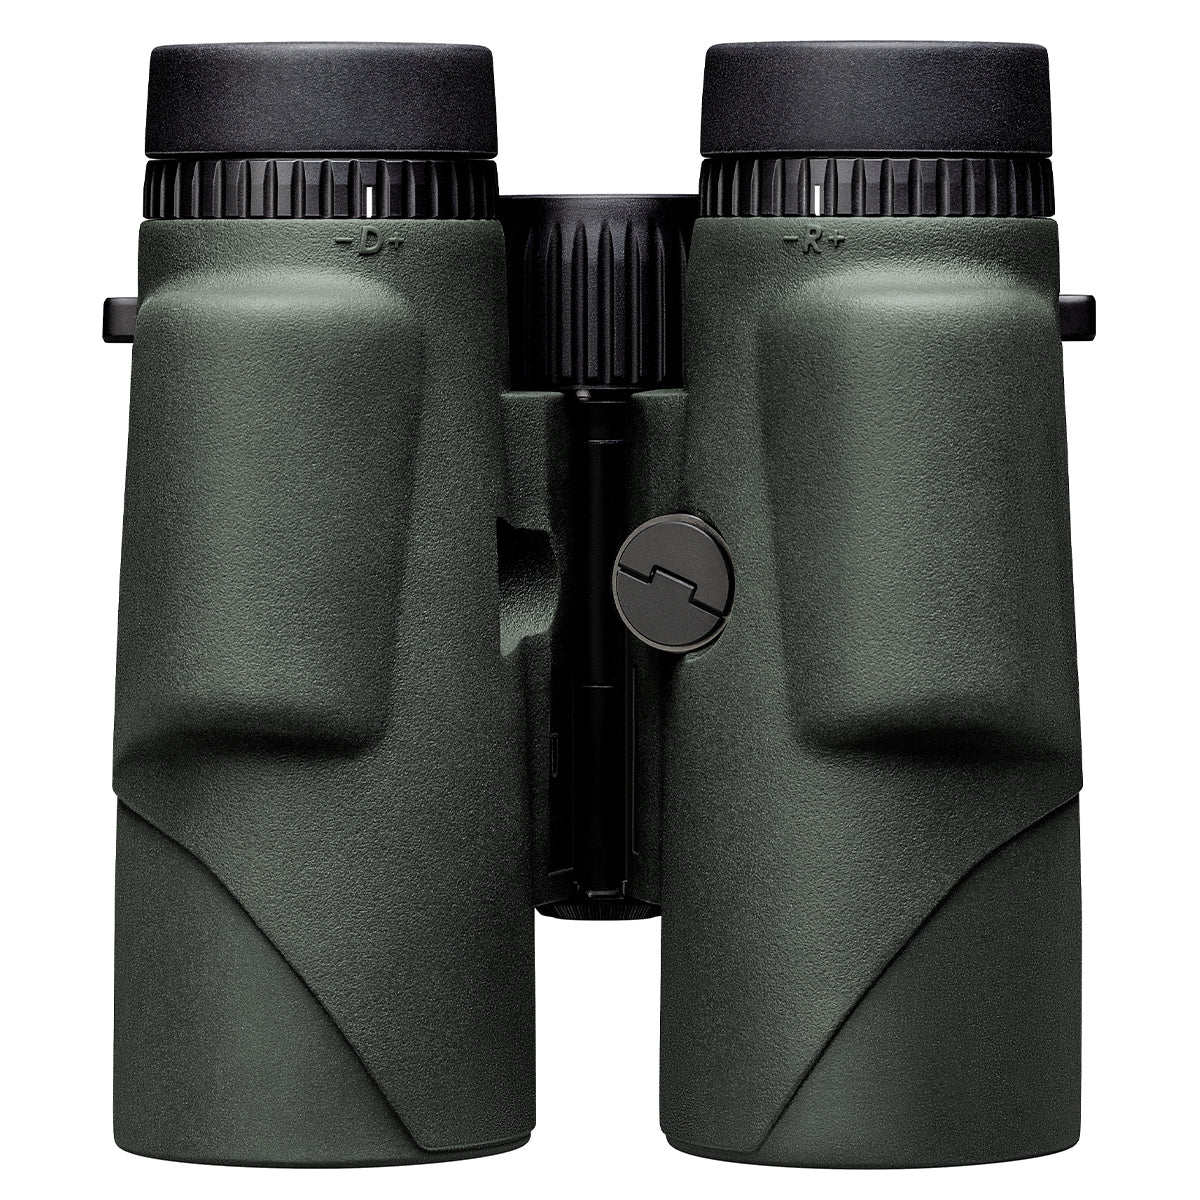 Vortex Fury HD 5000 AB Rangefinding 10x42 Binocular in  by GOHUNT | Vortex Optics - GOHUNT Shop